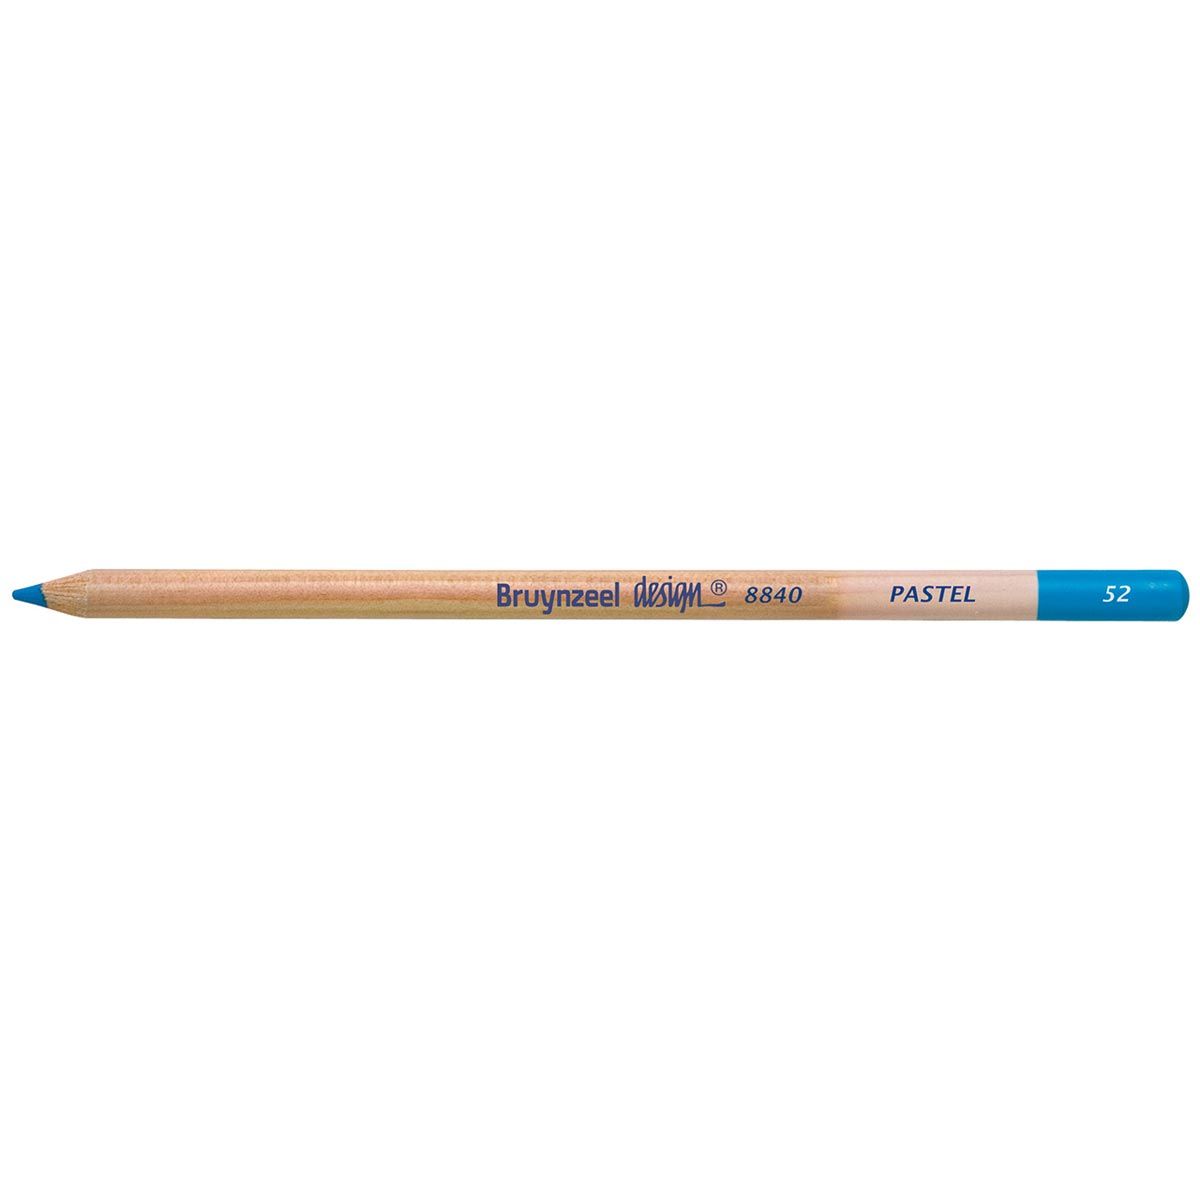 Bruynzeel Design Pastel Pencil - Turquoise Blue 52